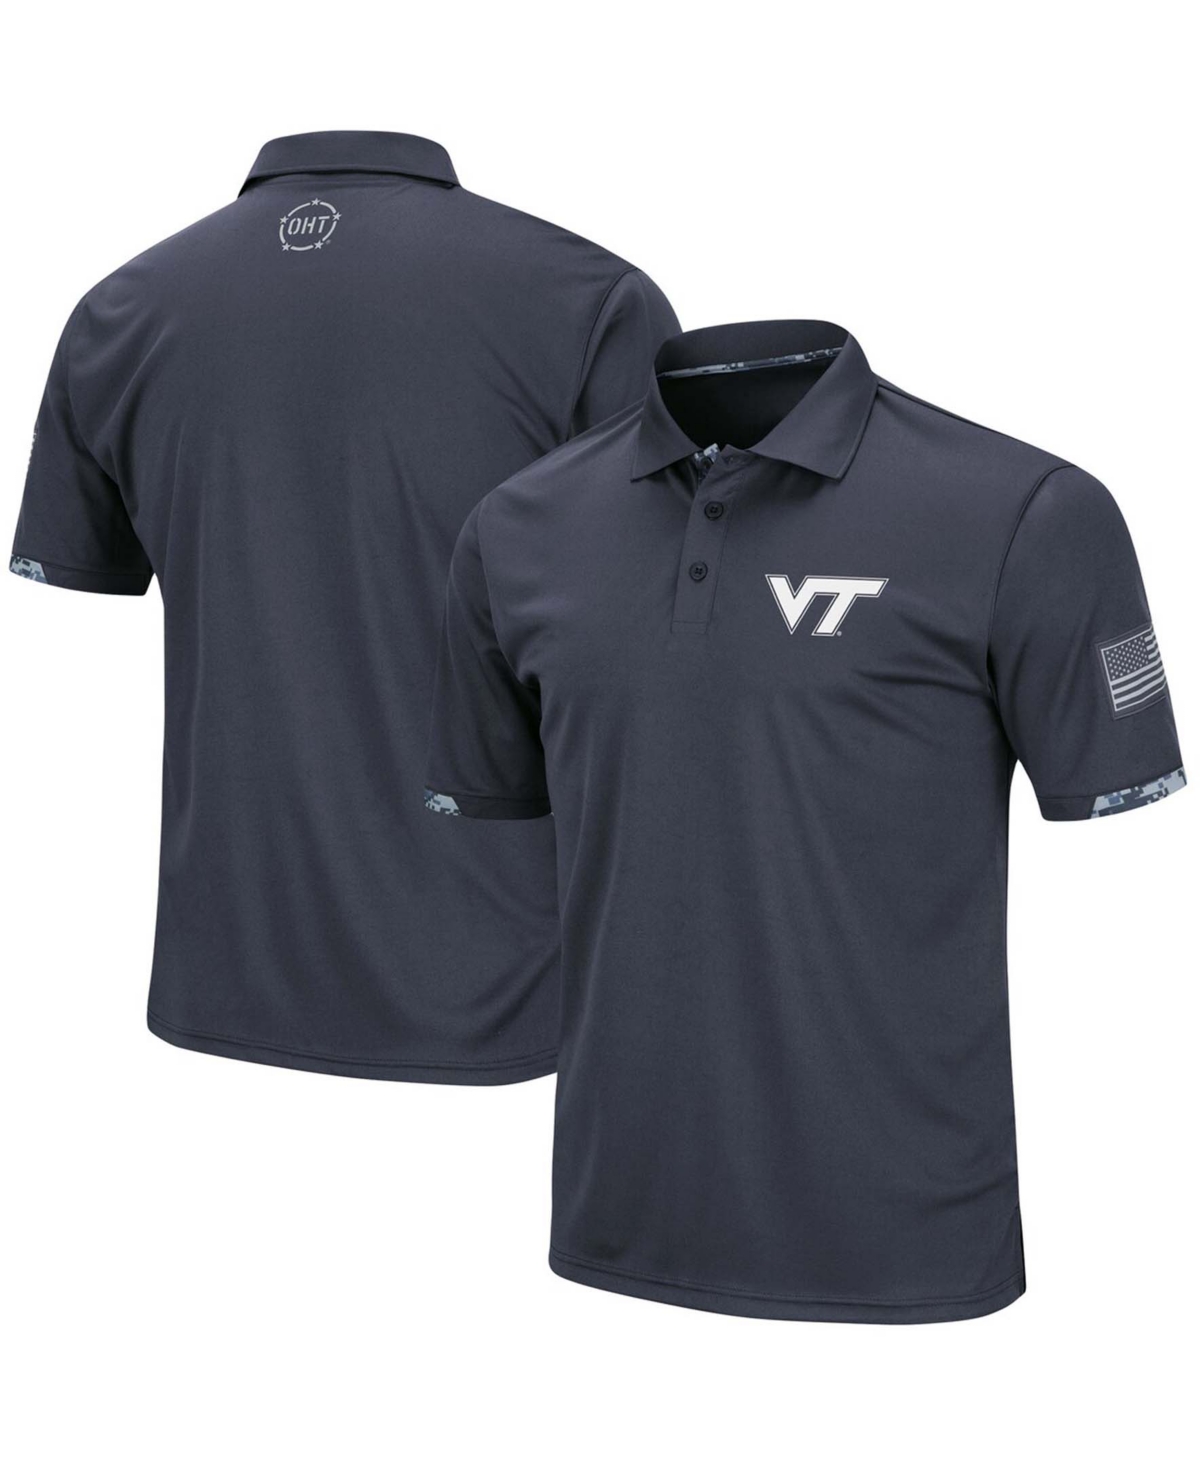 Men's Charcoal Virginia Tech Hokies Oht Military-Inspired Appreciation Digital Camo Polo Shirt - Charcoal